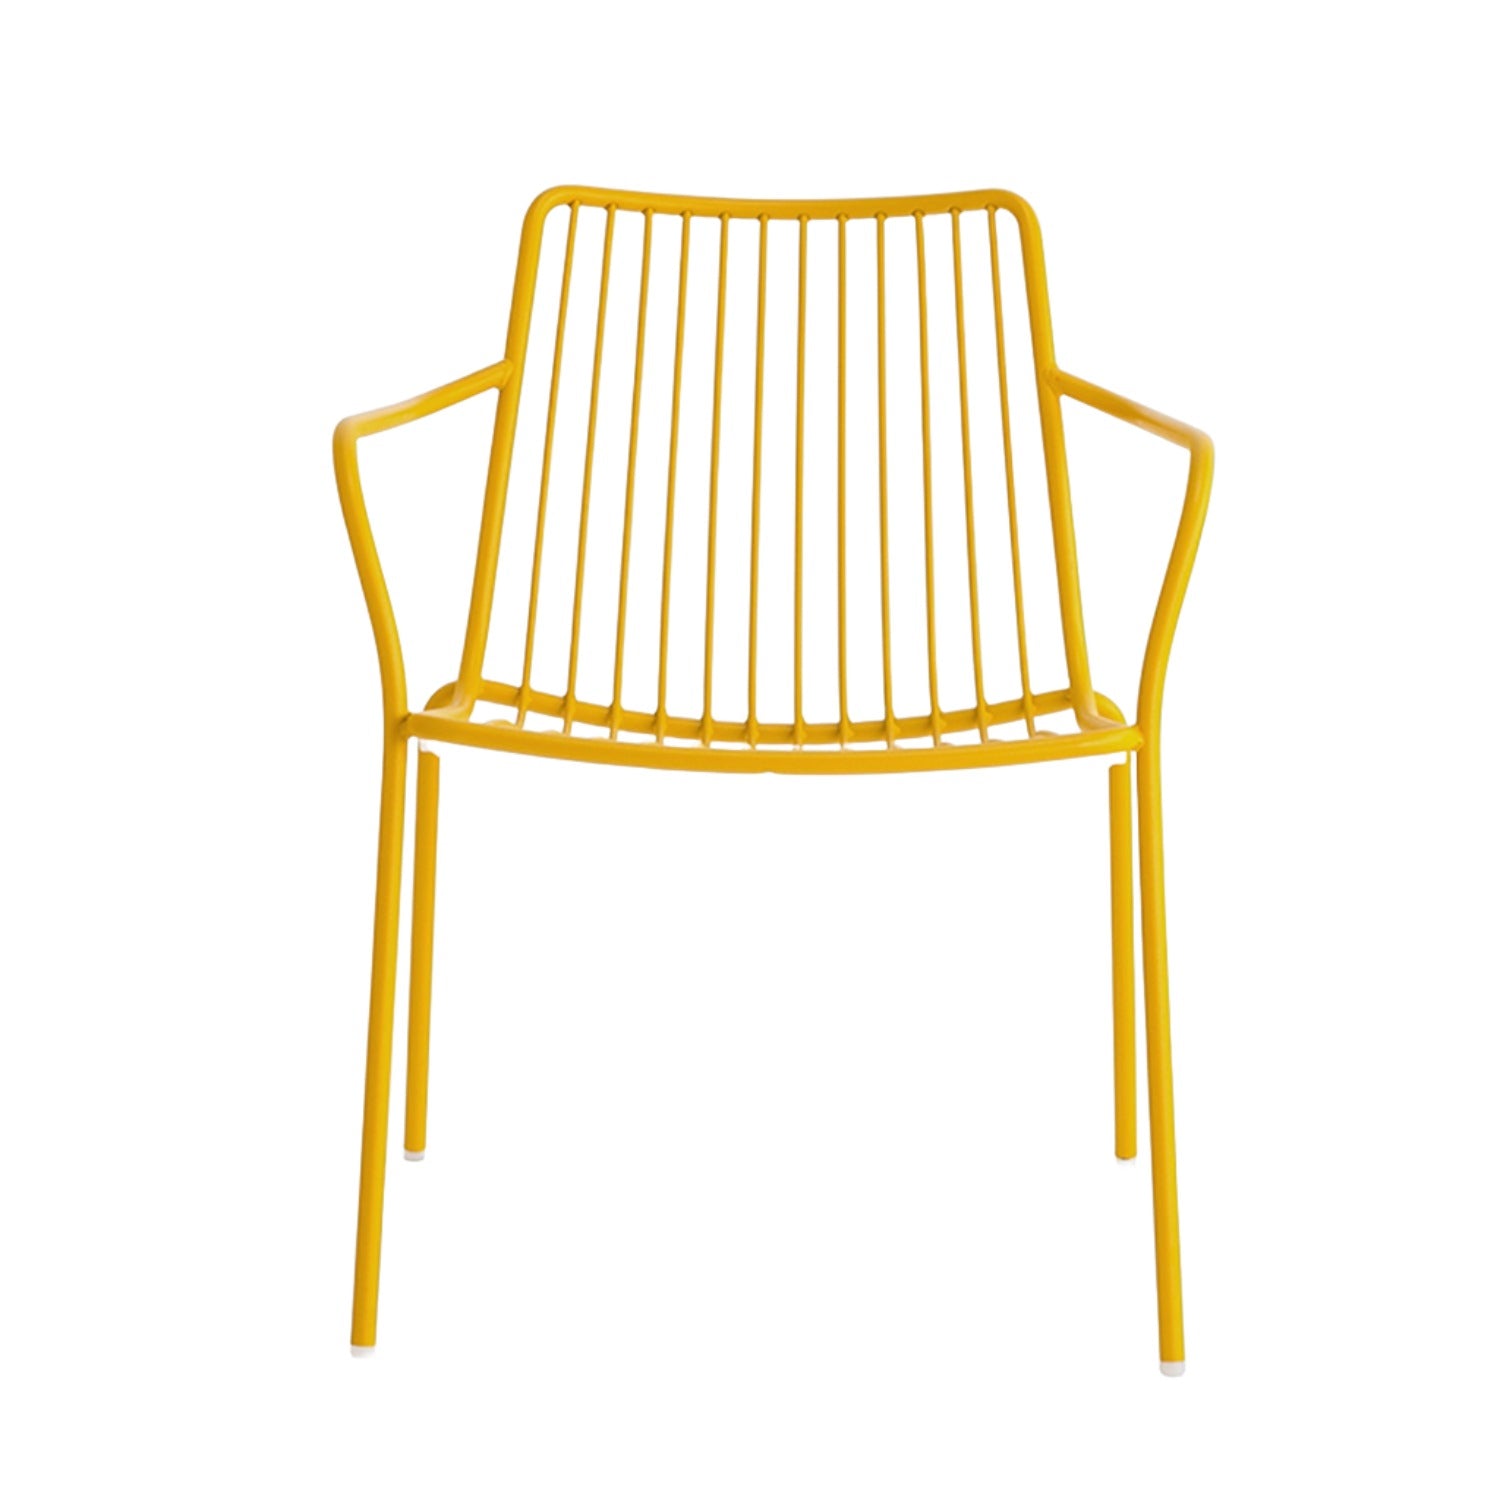 Pedrali Nolita 3659 Garden Lounge Chair in yellow